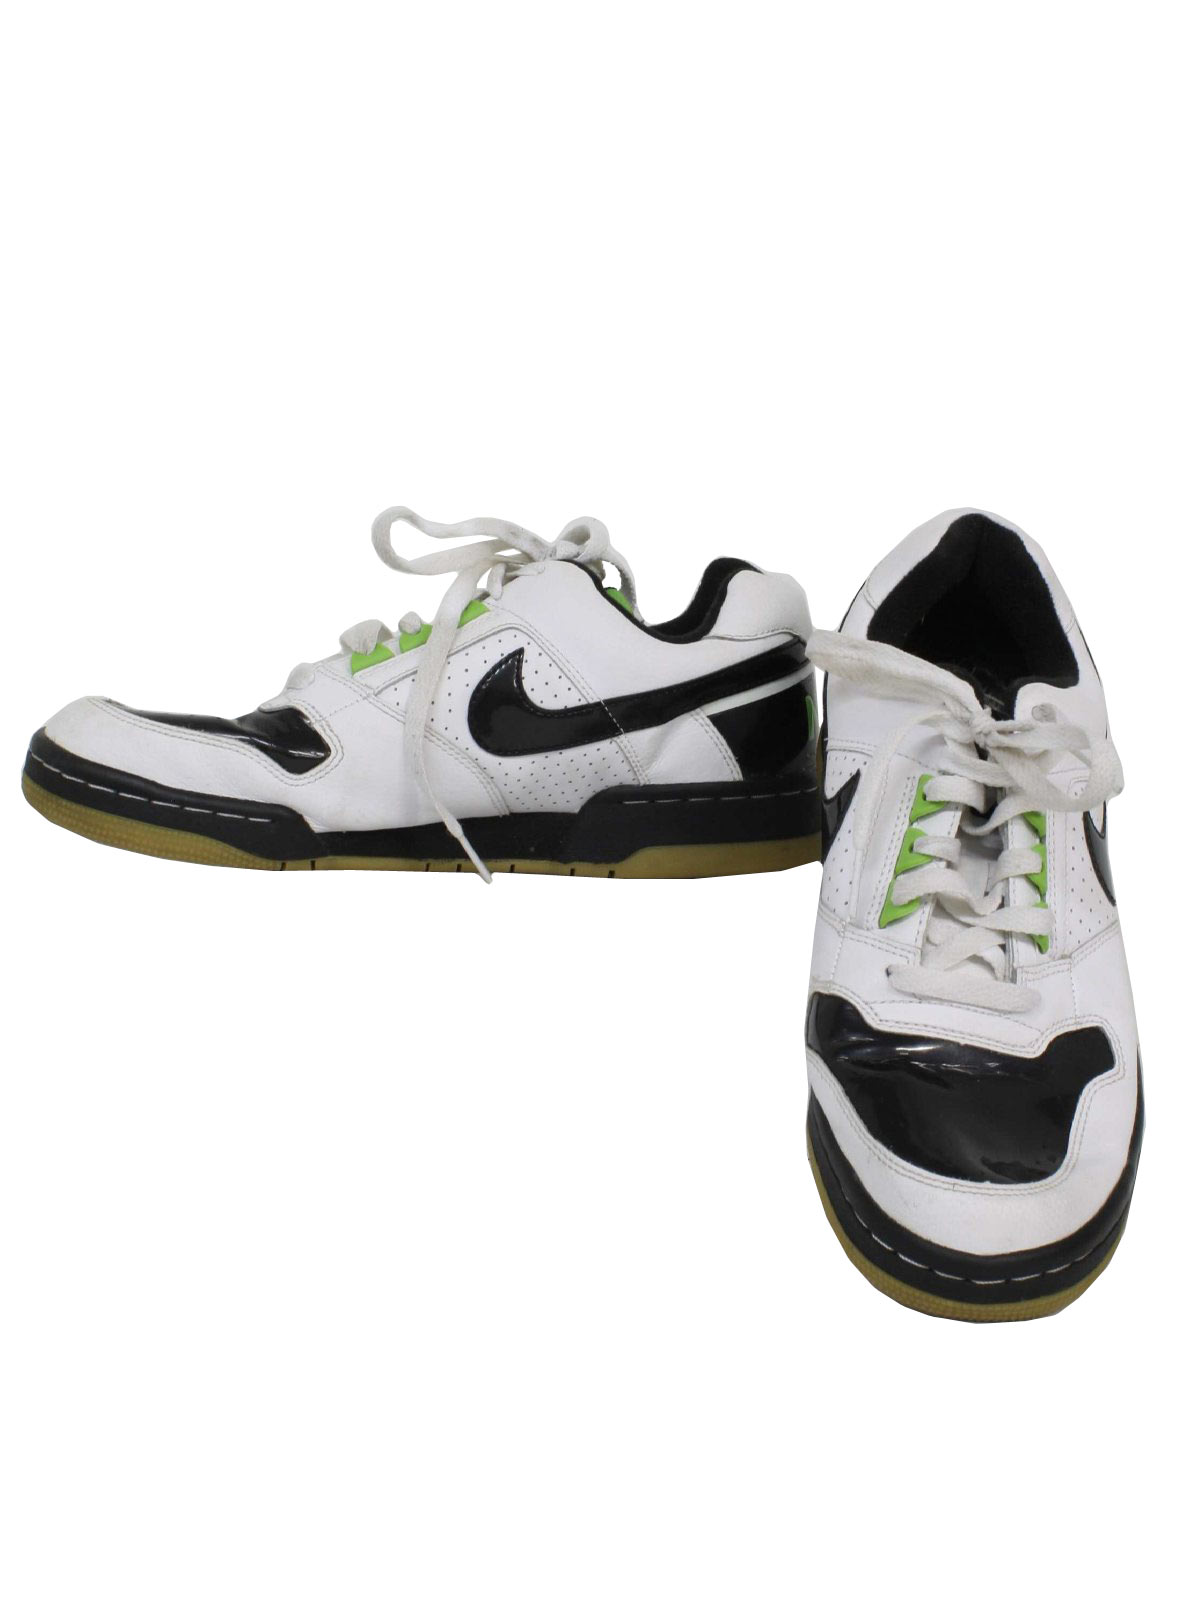 90s nike tennis shoes